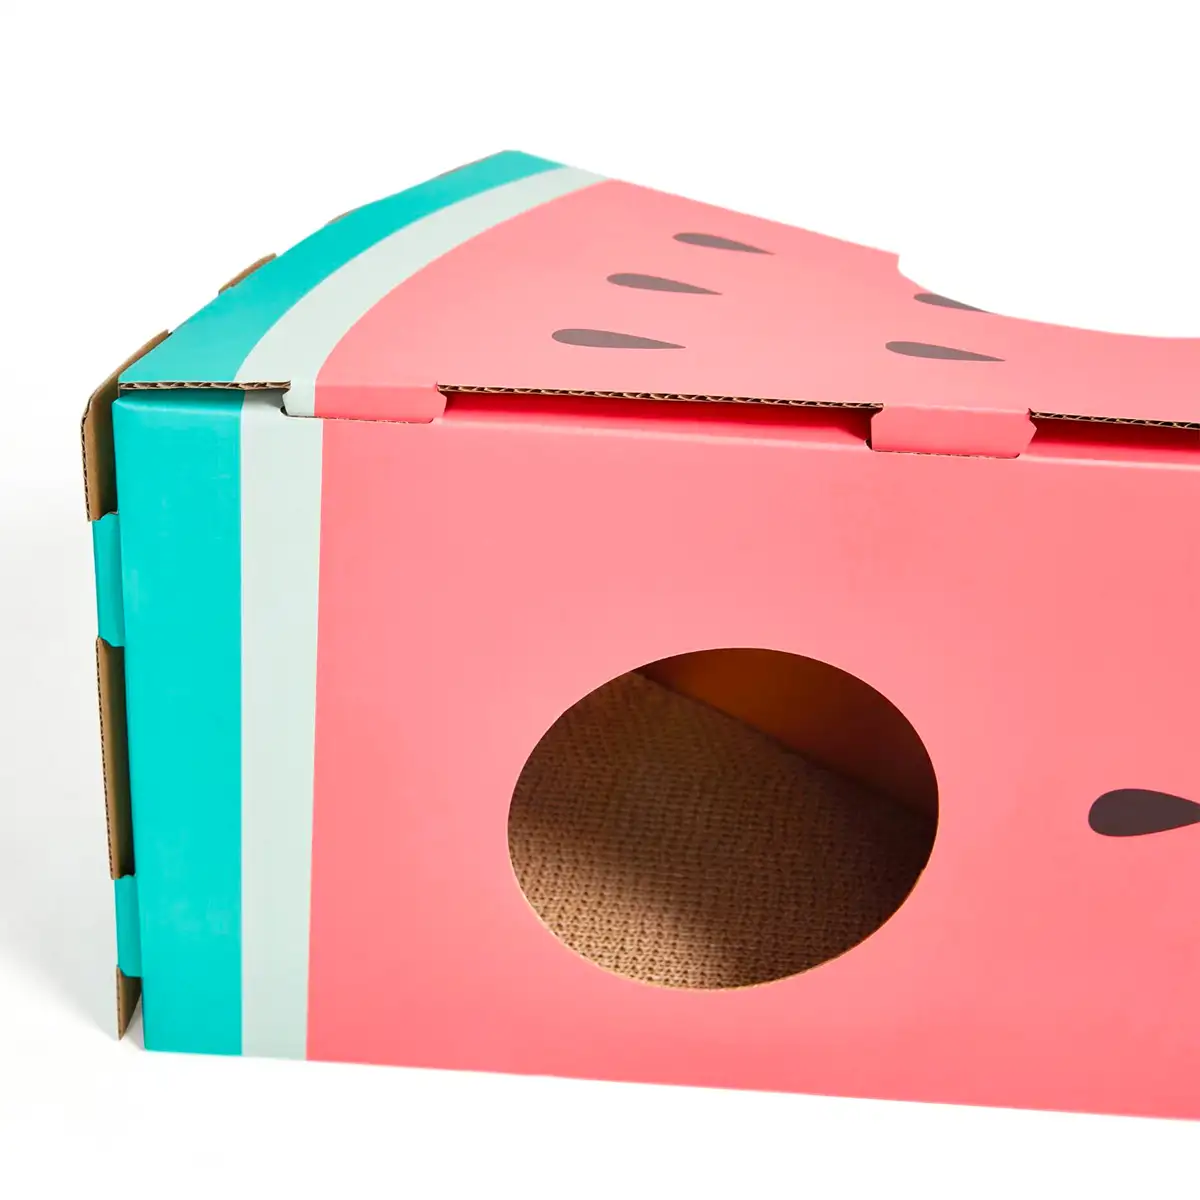 Vetreska - Watermelon Cat Scratching Box